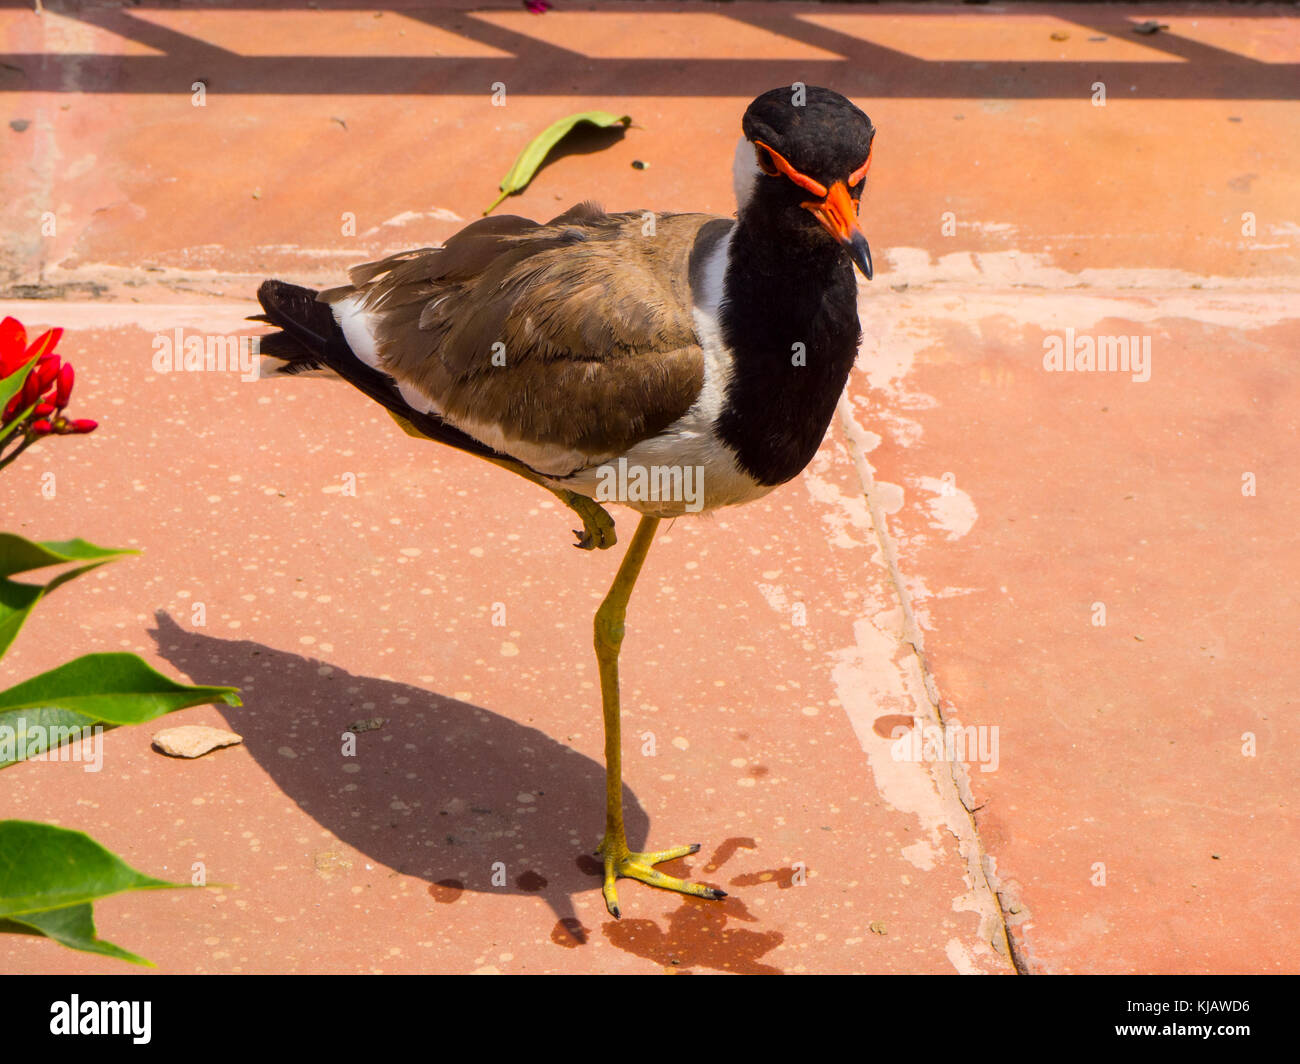 bird standing on one leg - Jaipur Rajastan India Stock Photo